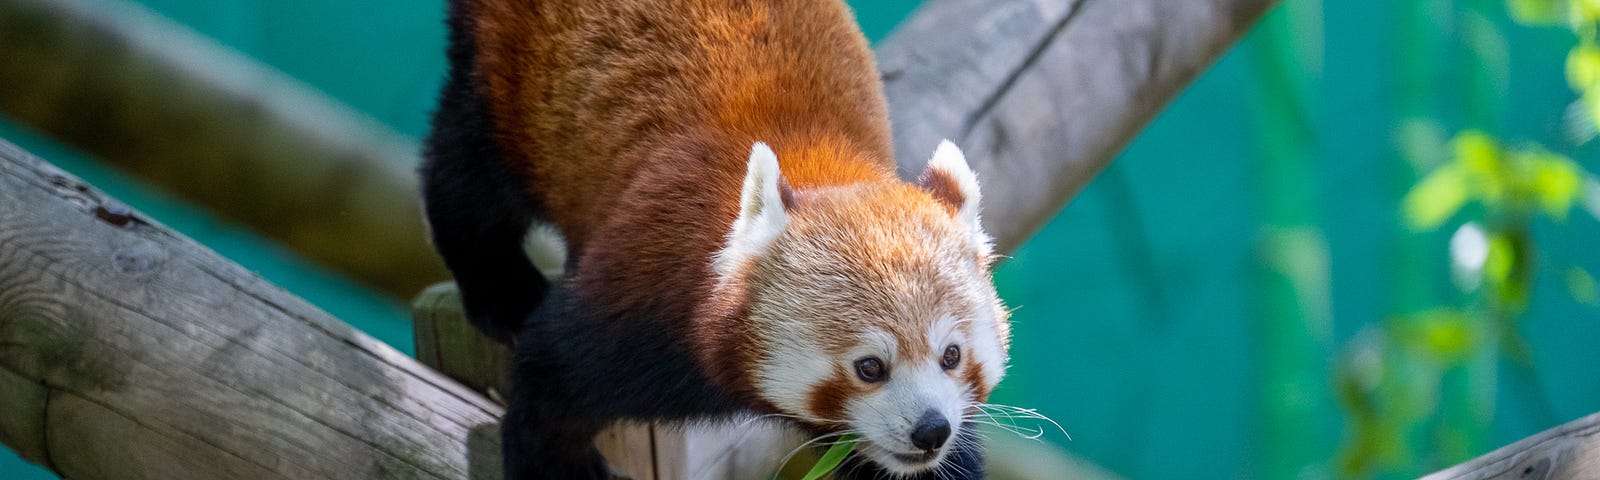 Red Panda — ©Sarah-Jane White — The Author